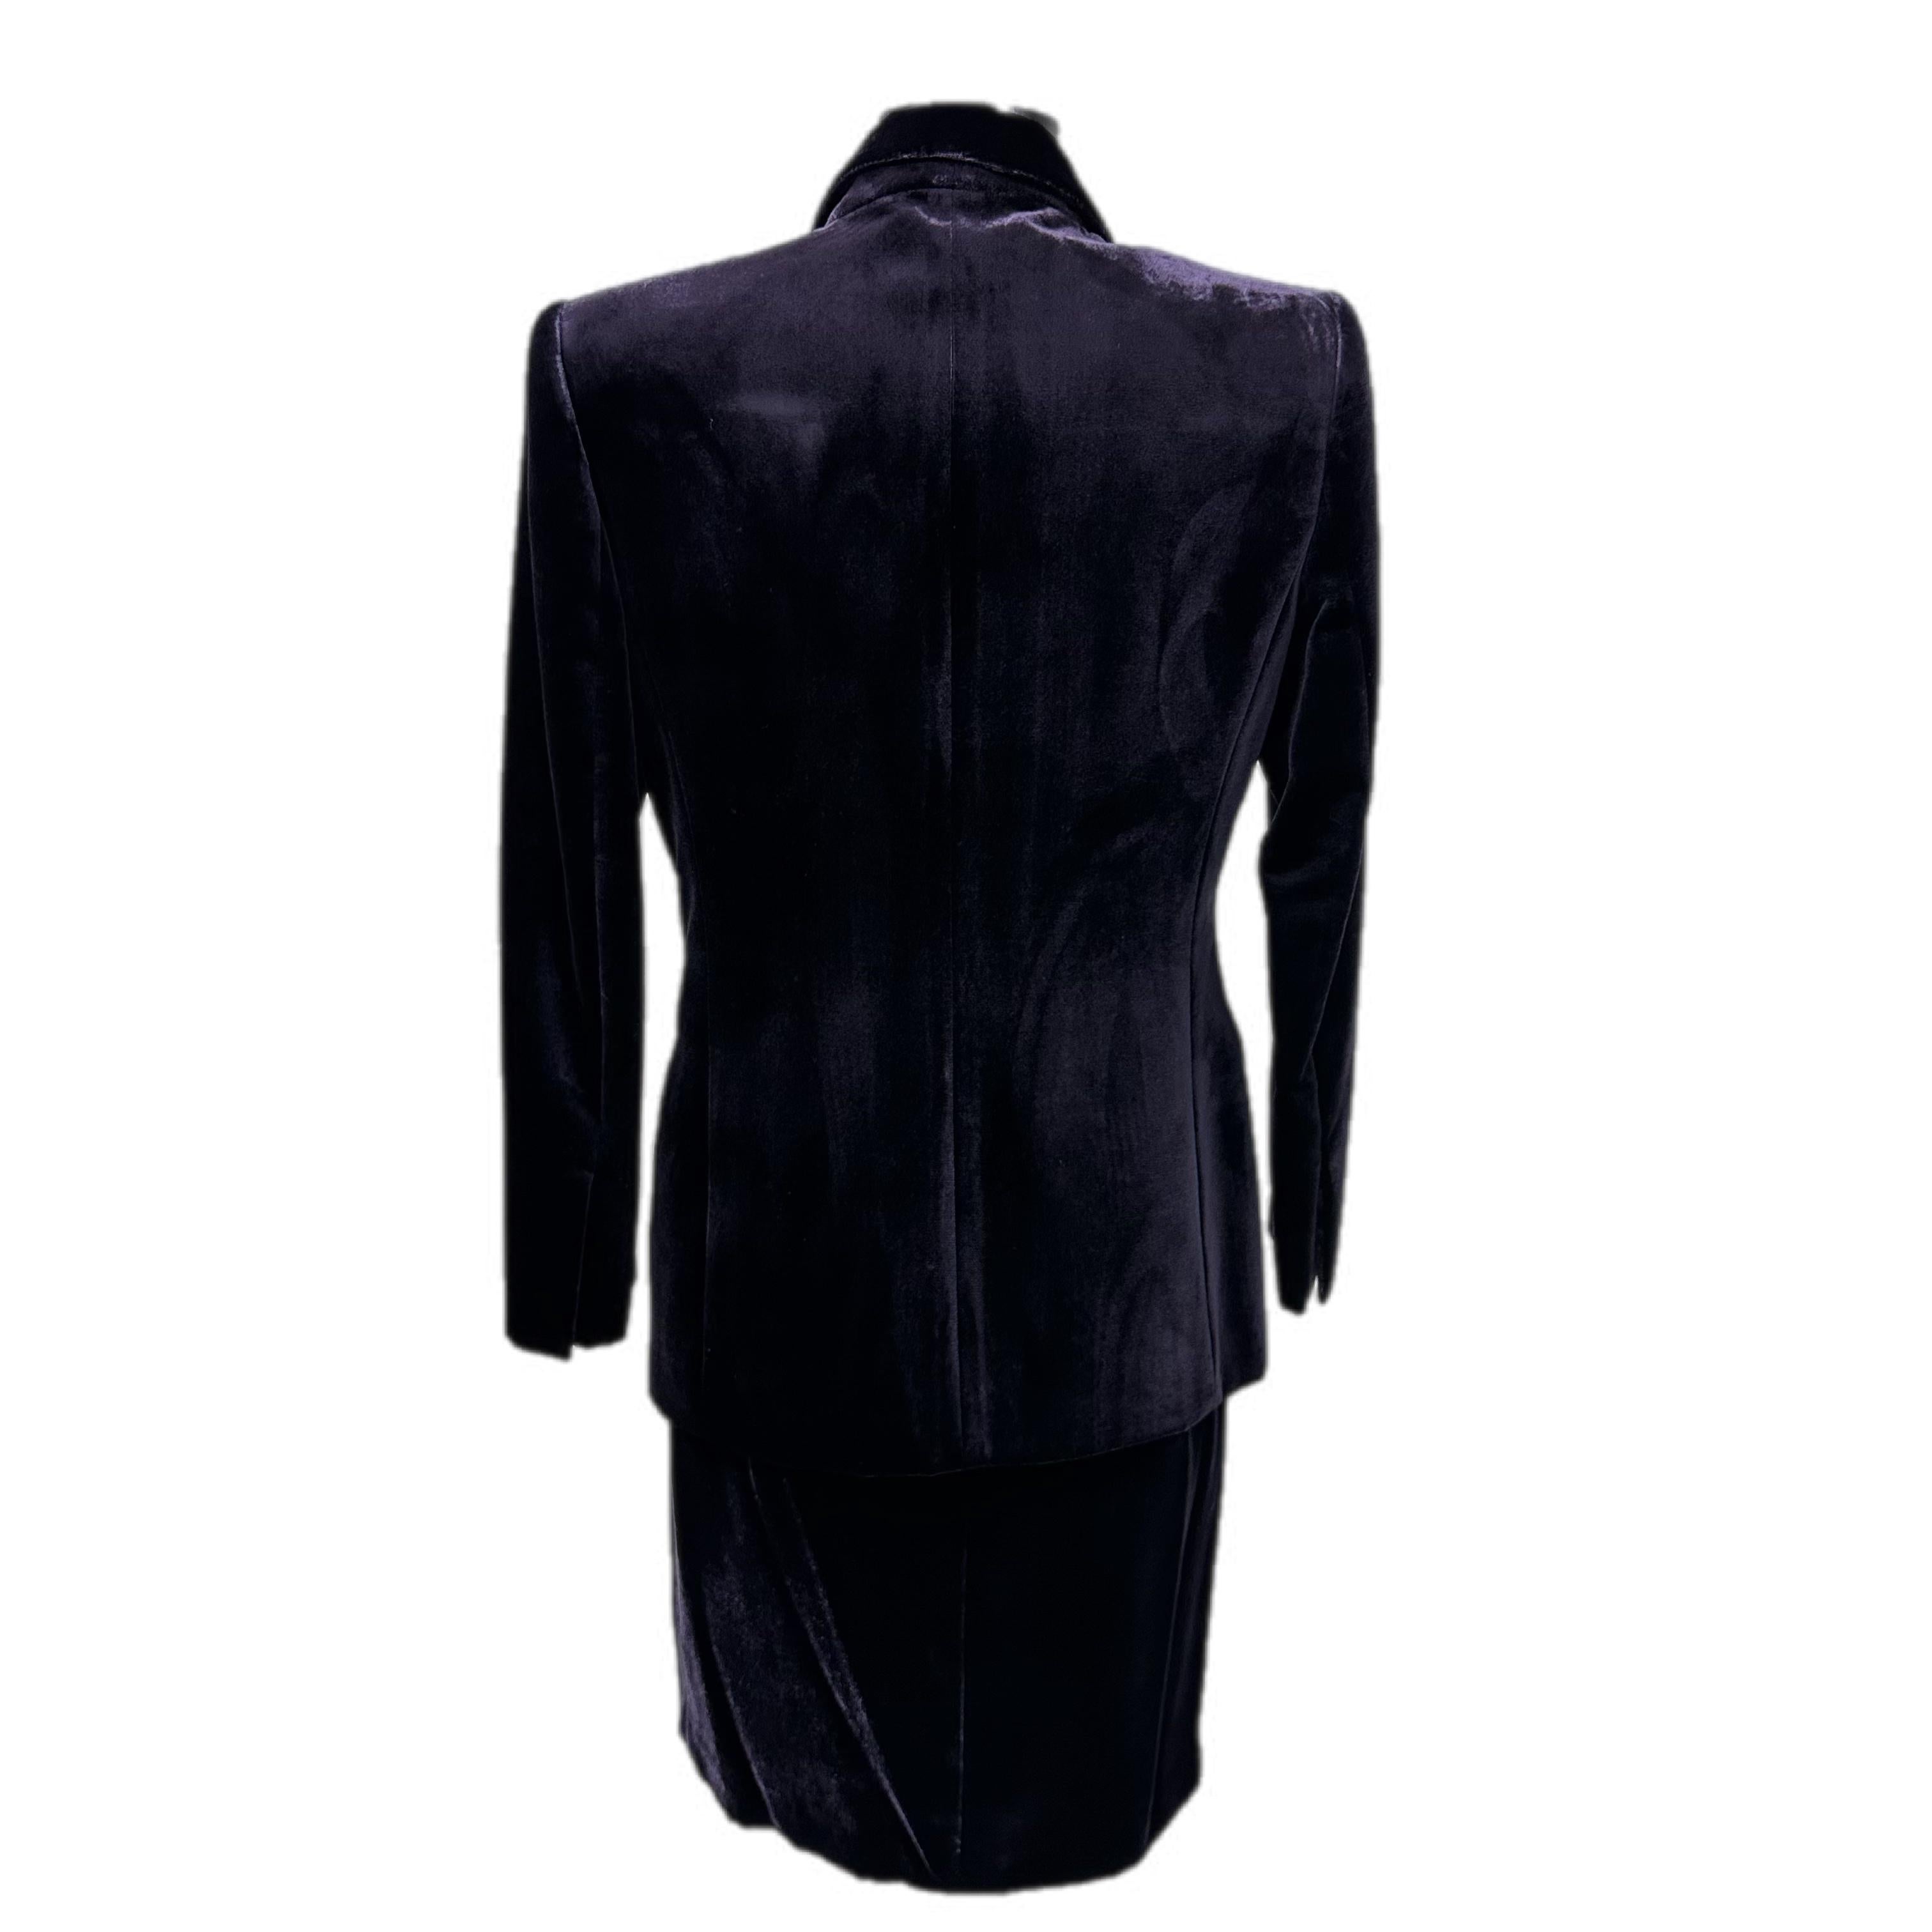 Gianfranco Ferré velvet suit In Excellent Condition For Sale In Basaluzzo, IT